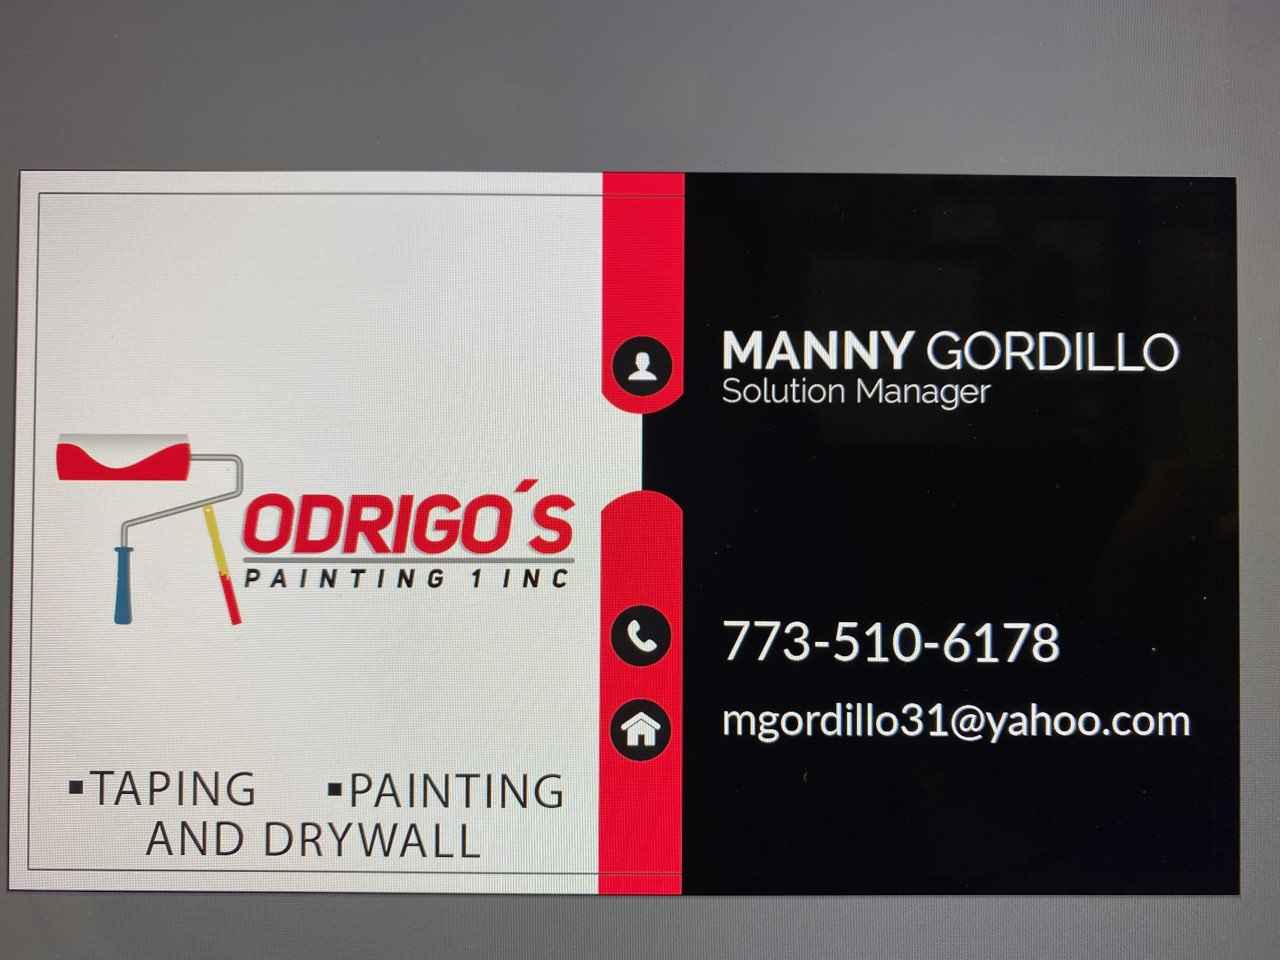 Rodrigo's Painting 1 Inc. Logo